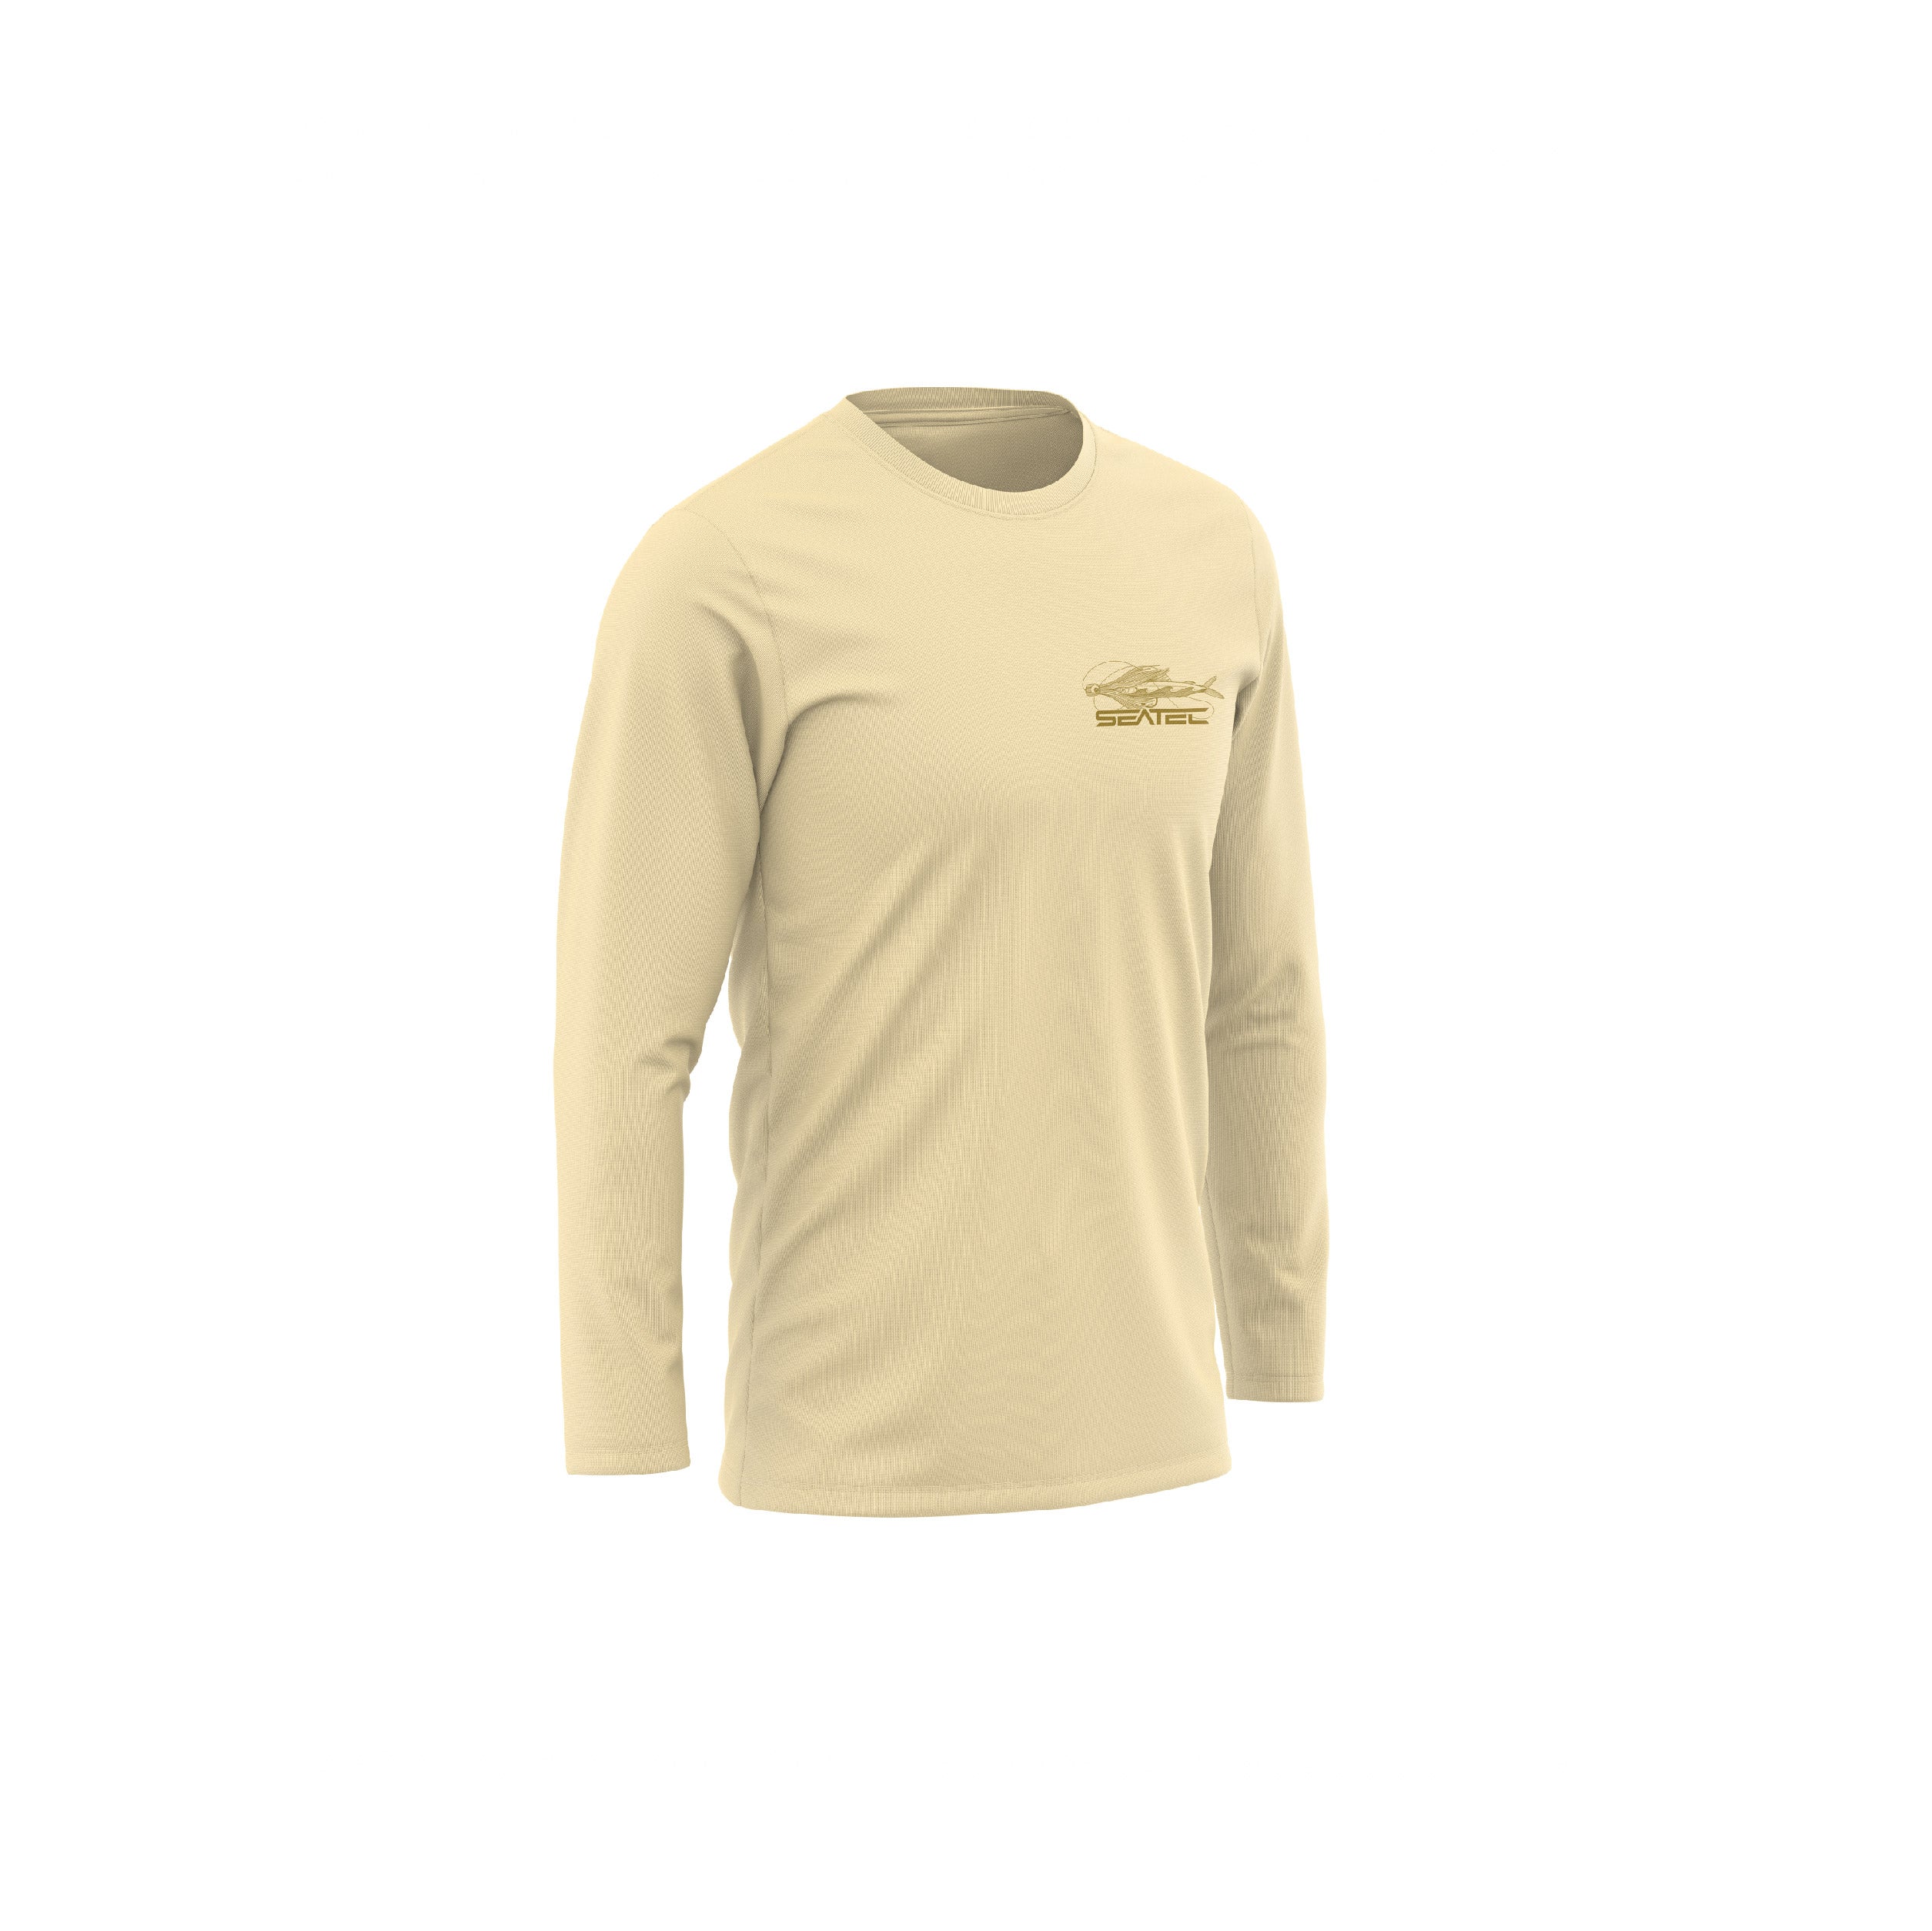 Seatec Outfitters Blackfin Tuna Sport Tec Performance Shirt, Long Sleeve S